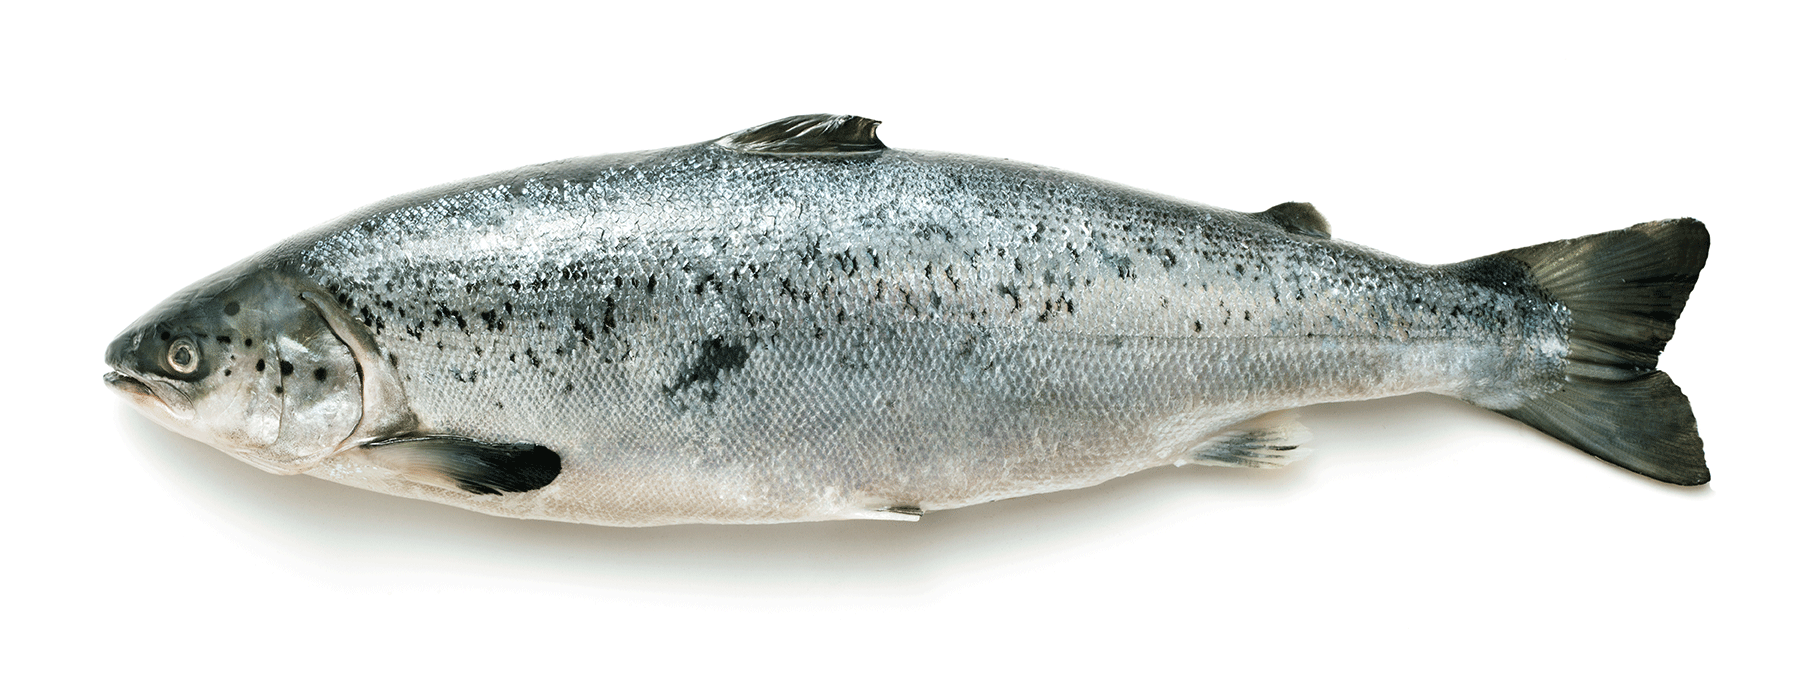 A whole wild-caught salmon.